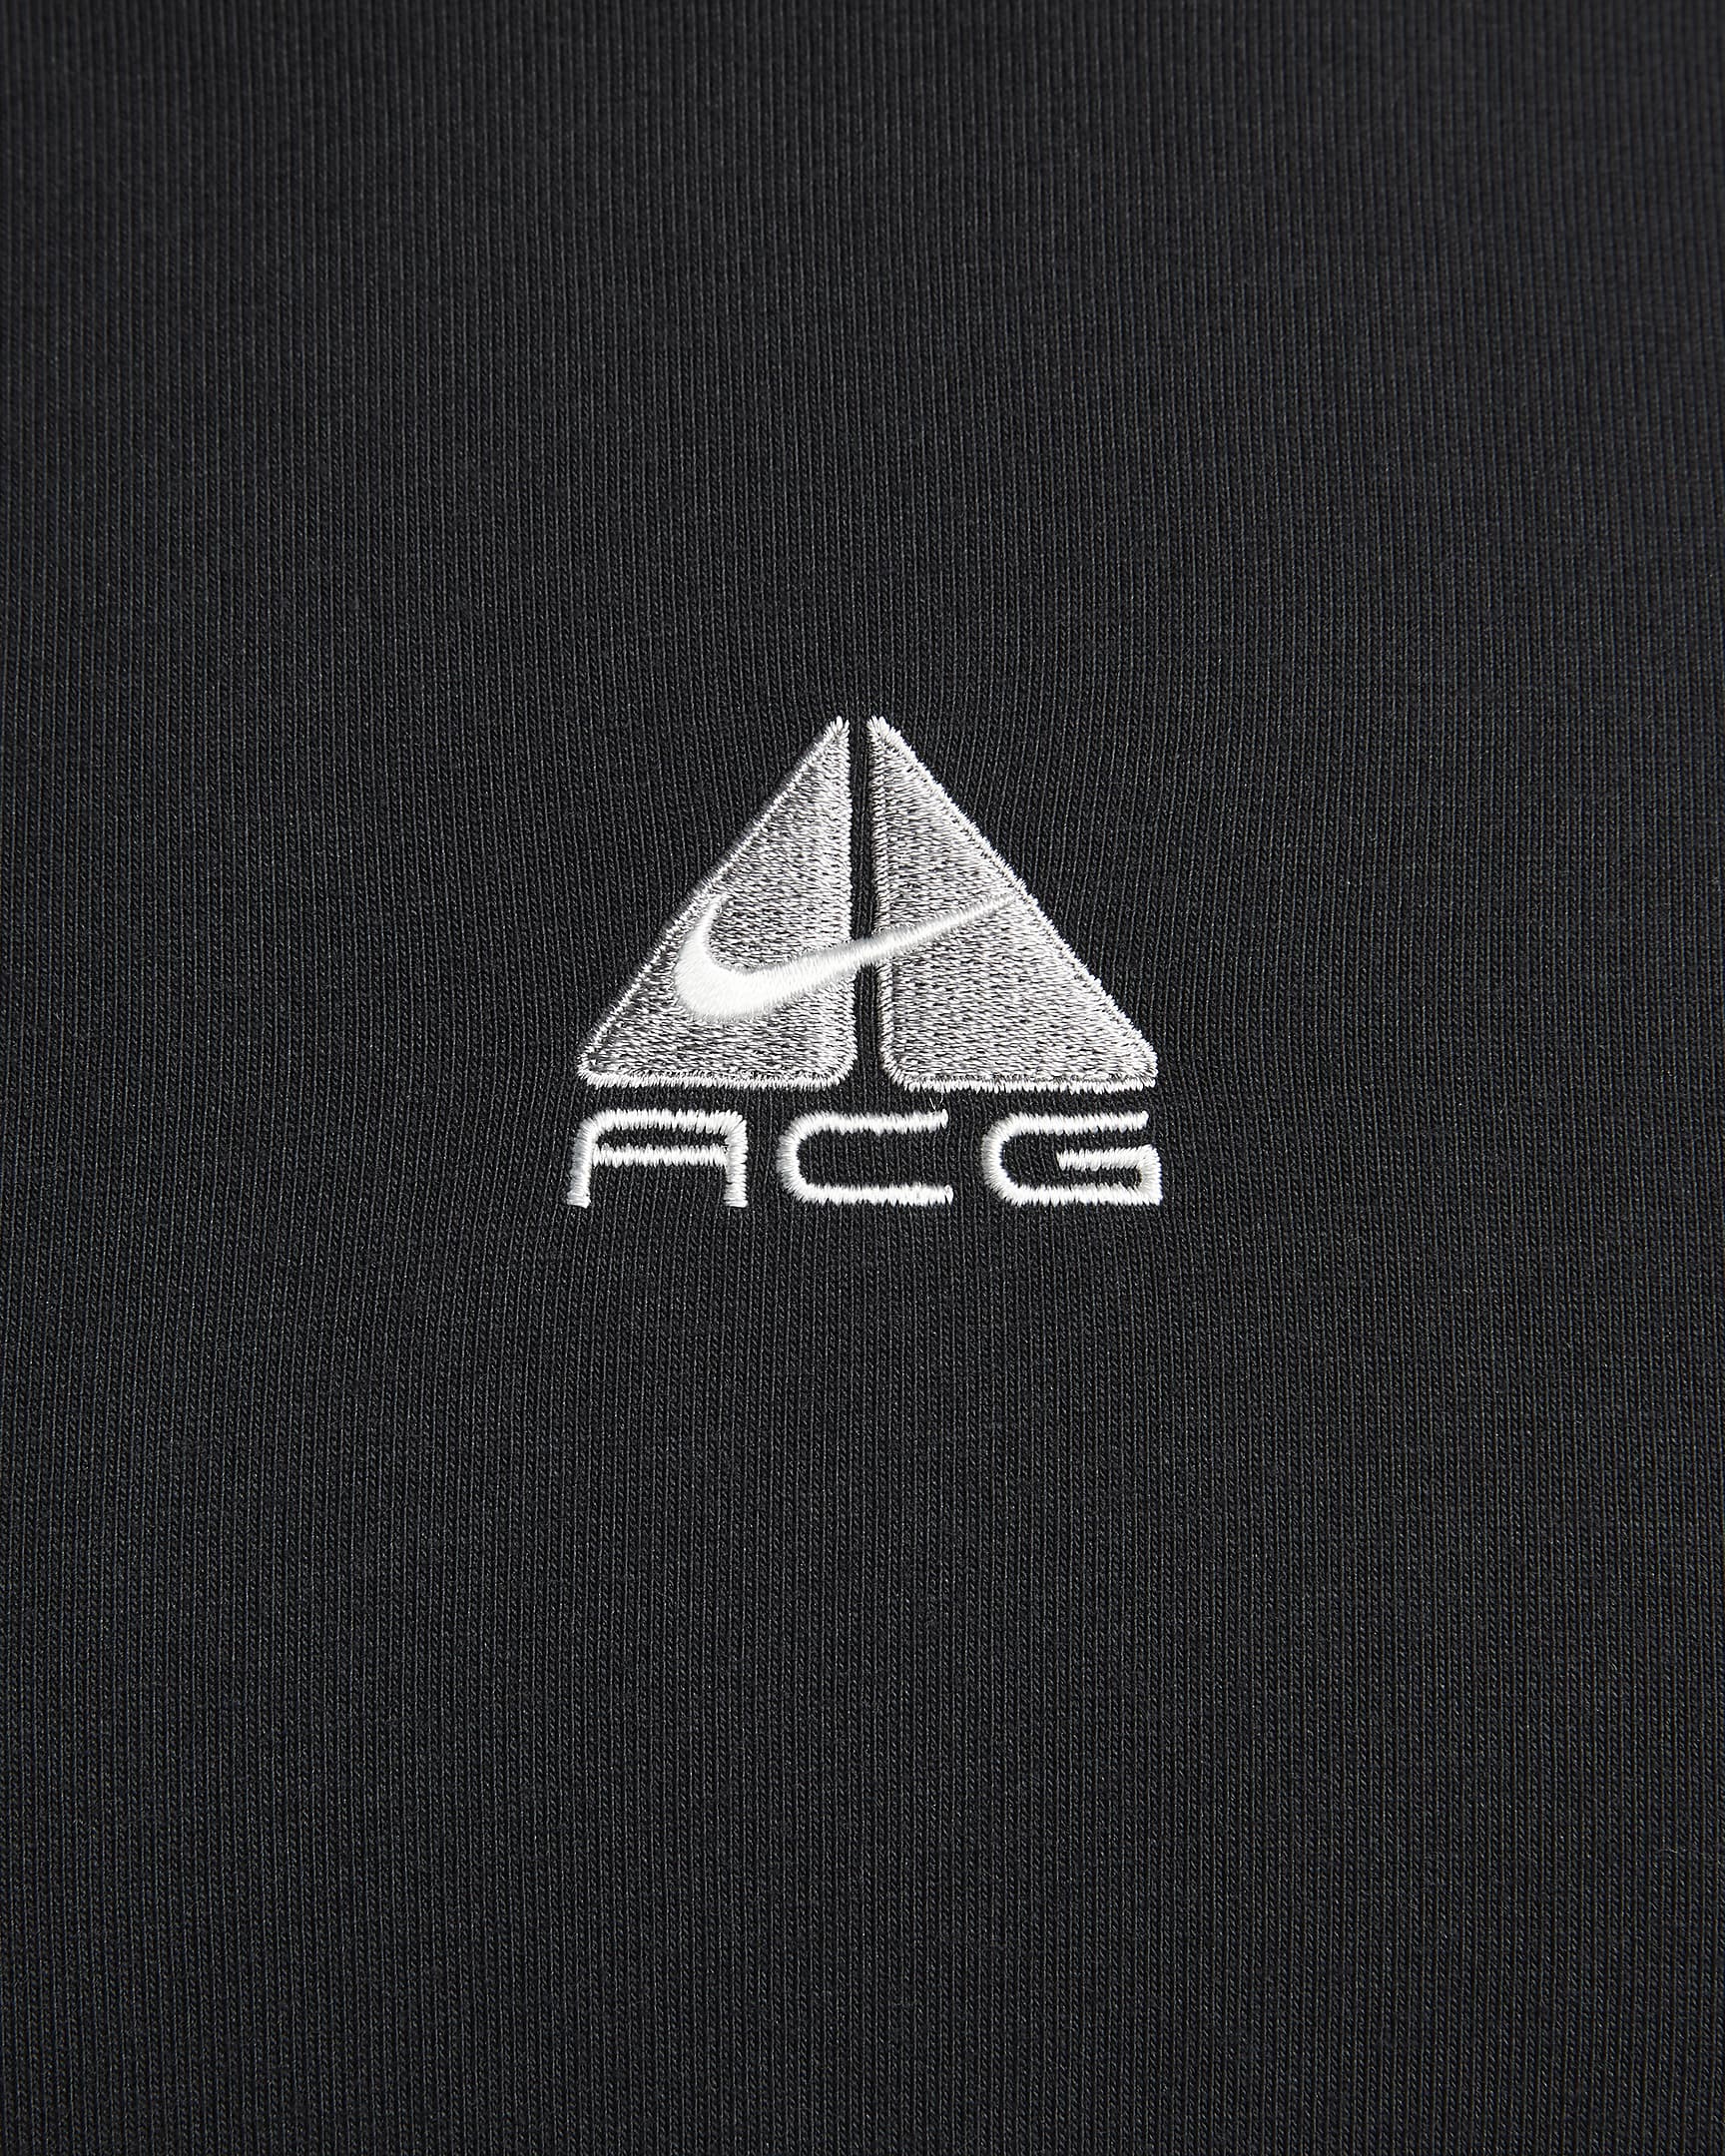 Nike ACG Men's T-Shirt - Black/Light Smoke Grey/Summit White